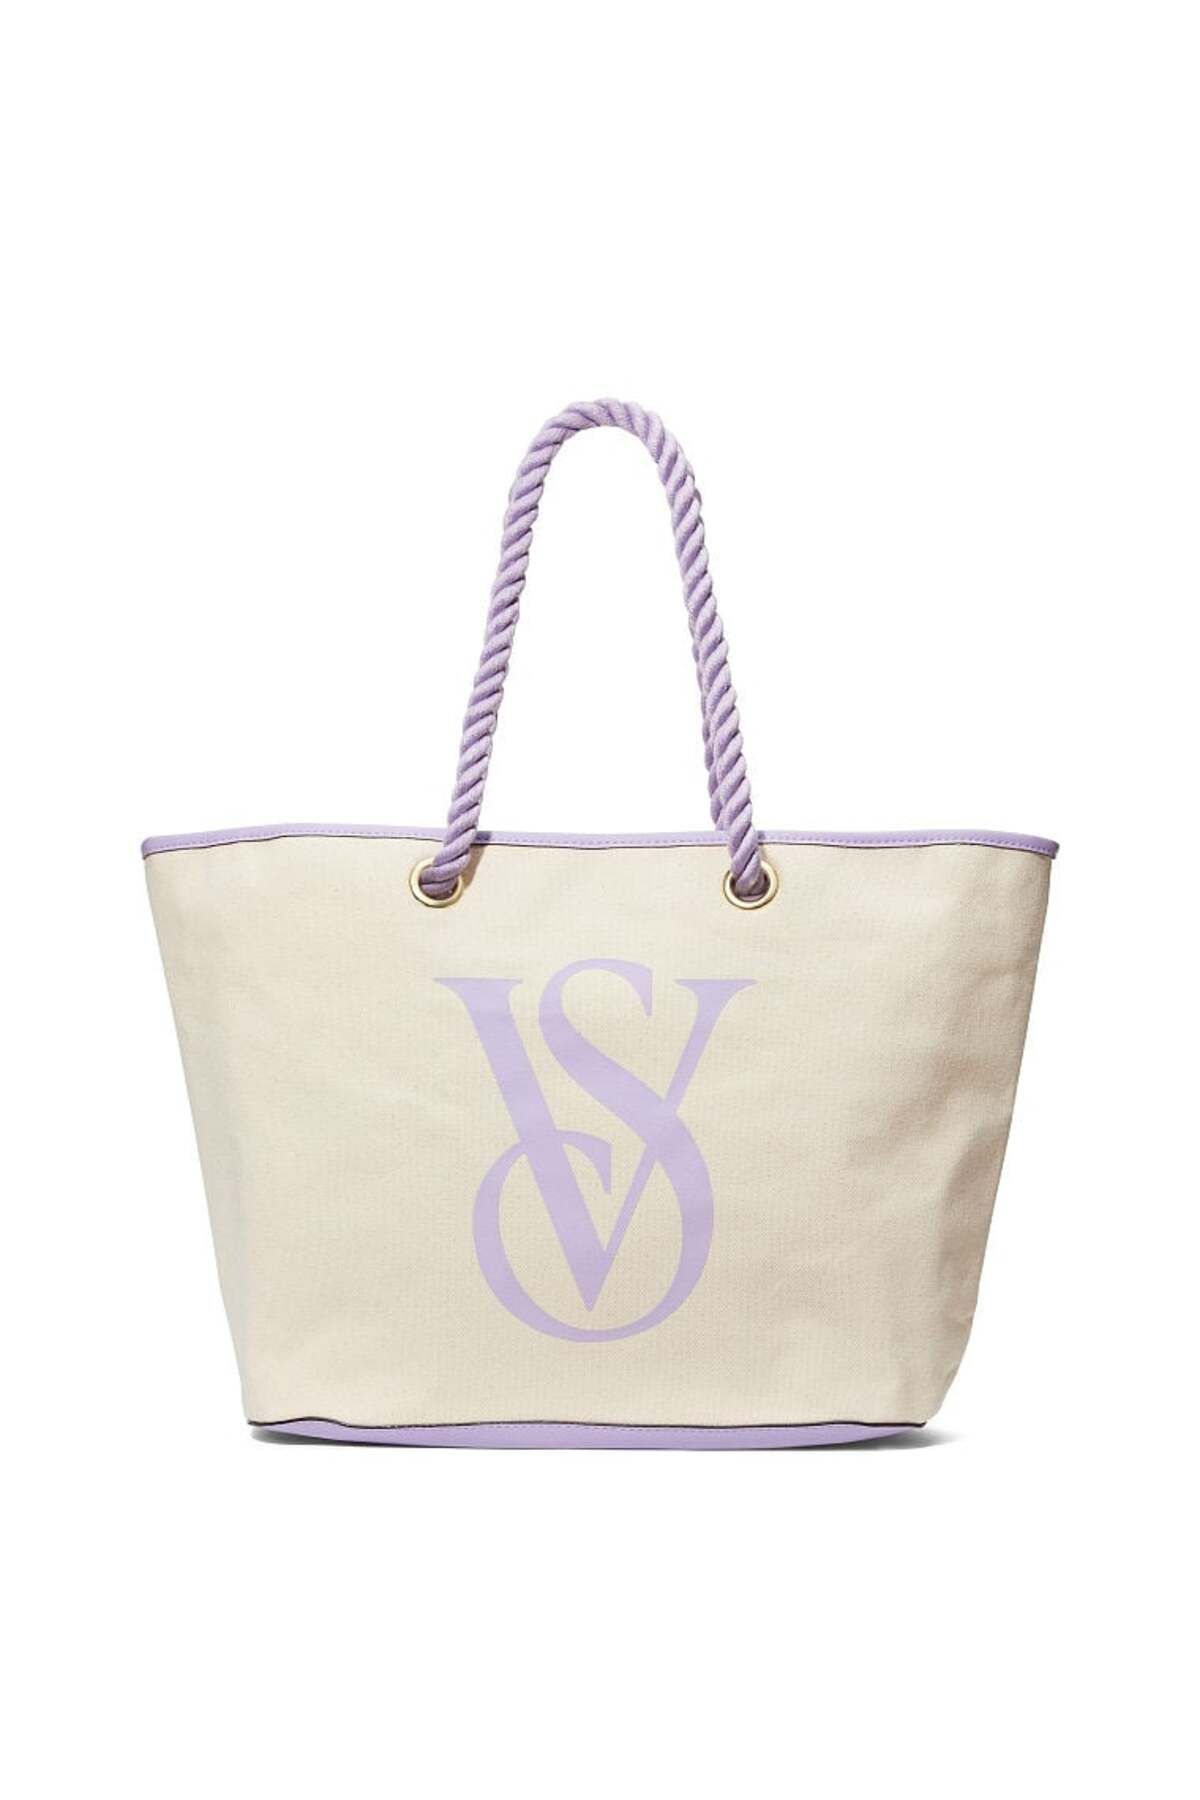 Victoria's Secret Victoria Secret Body Care Large Tote Bag